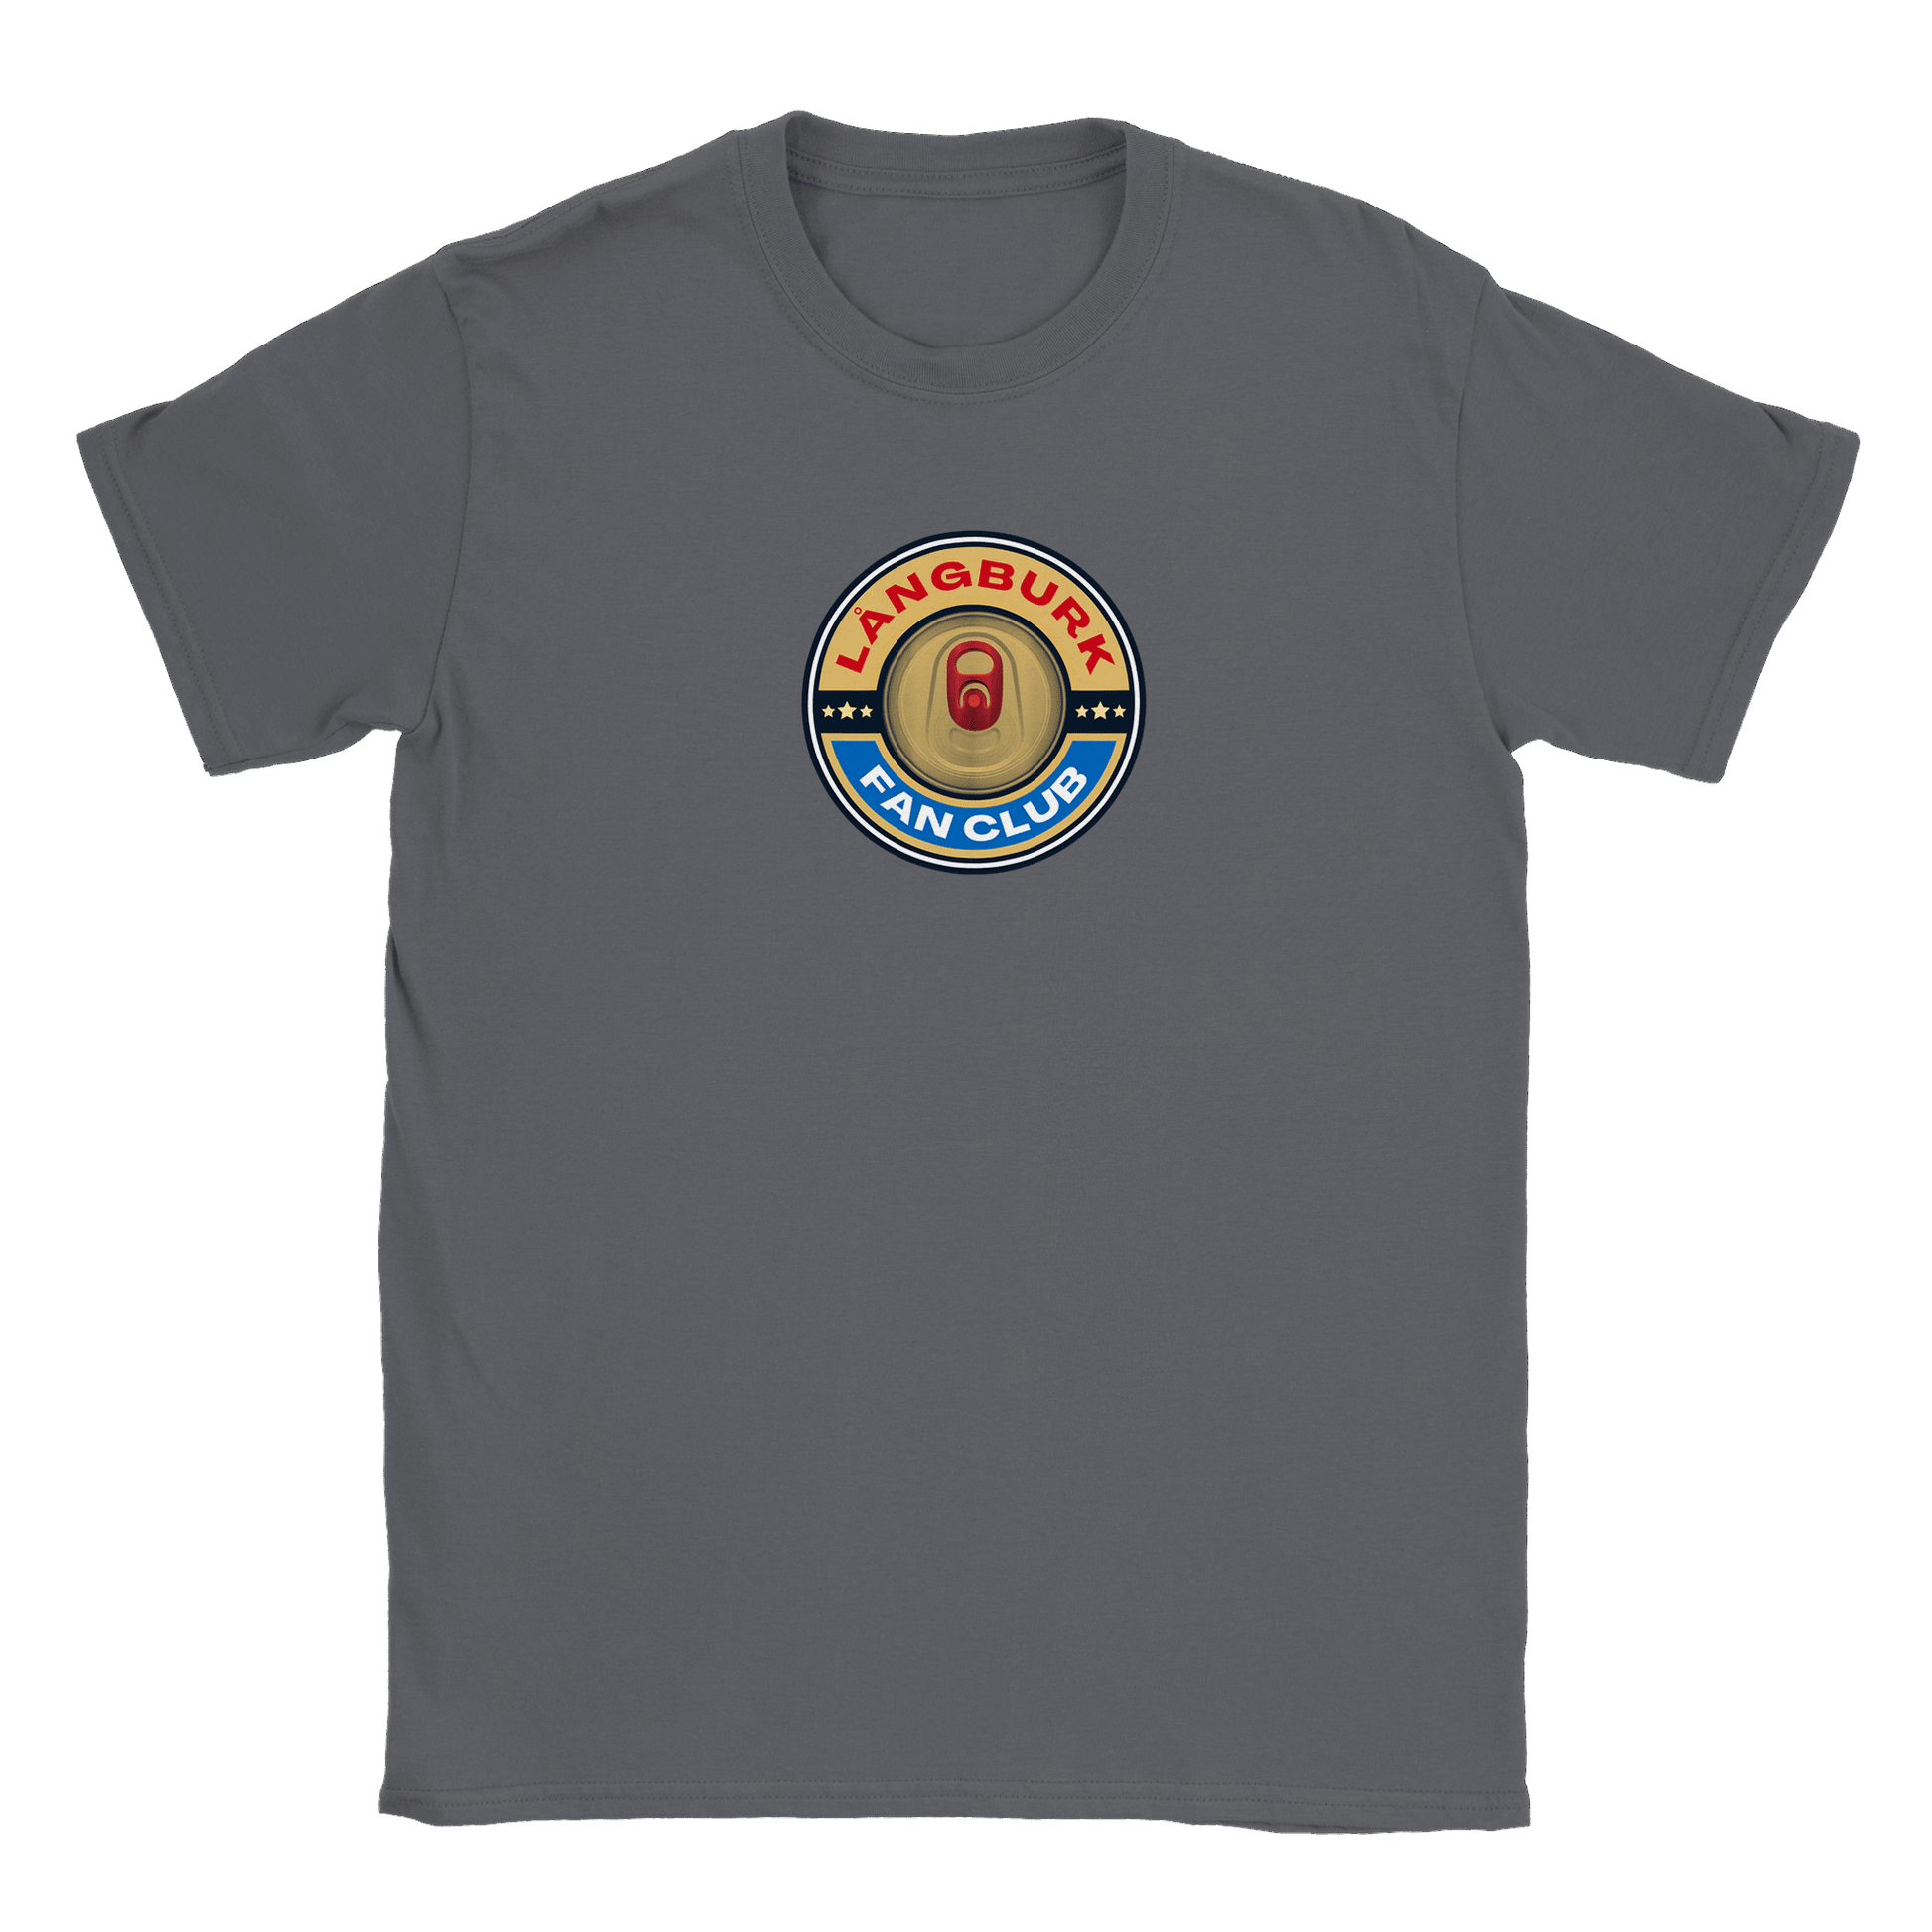 Långburk Fan Club Norrland Edition - T-shirt Charcoal